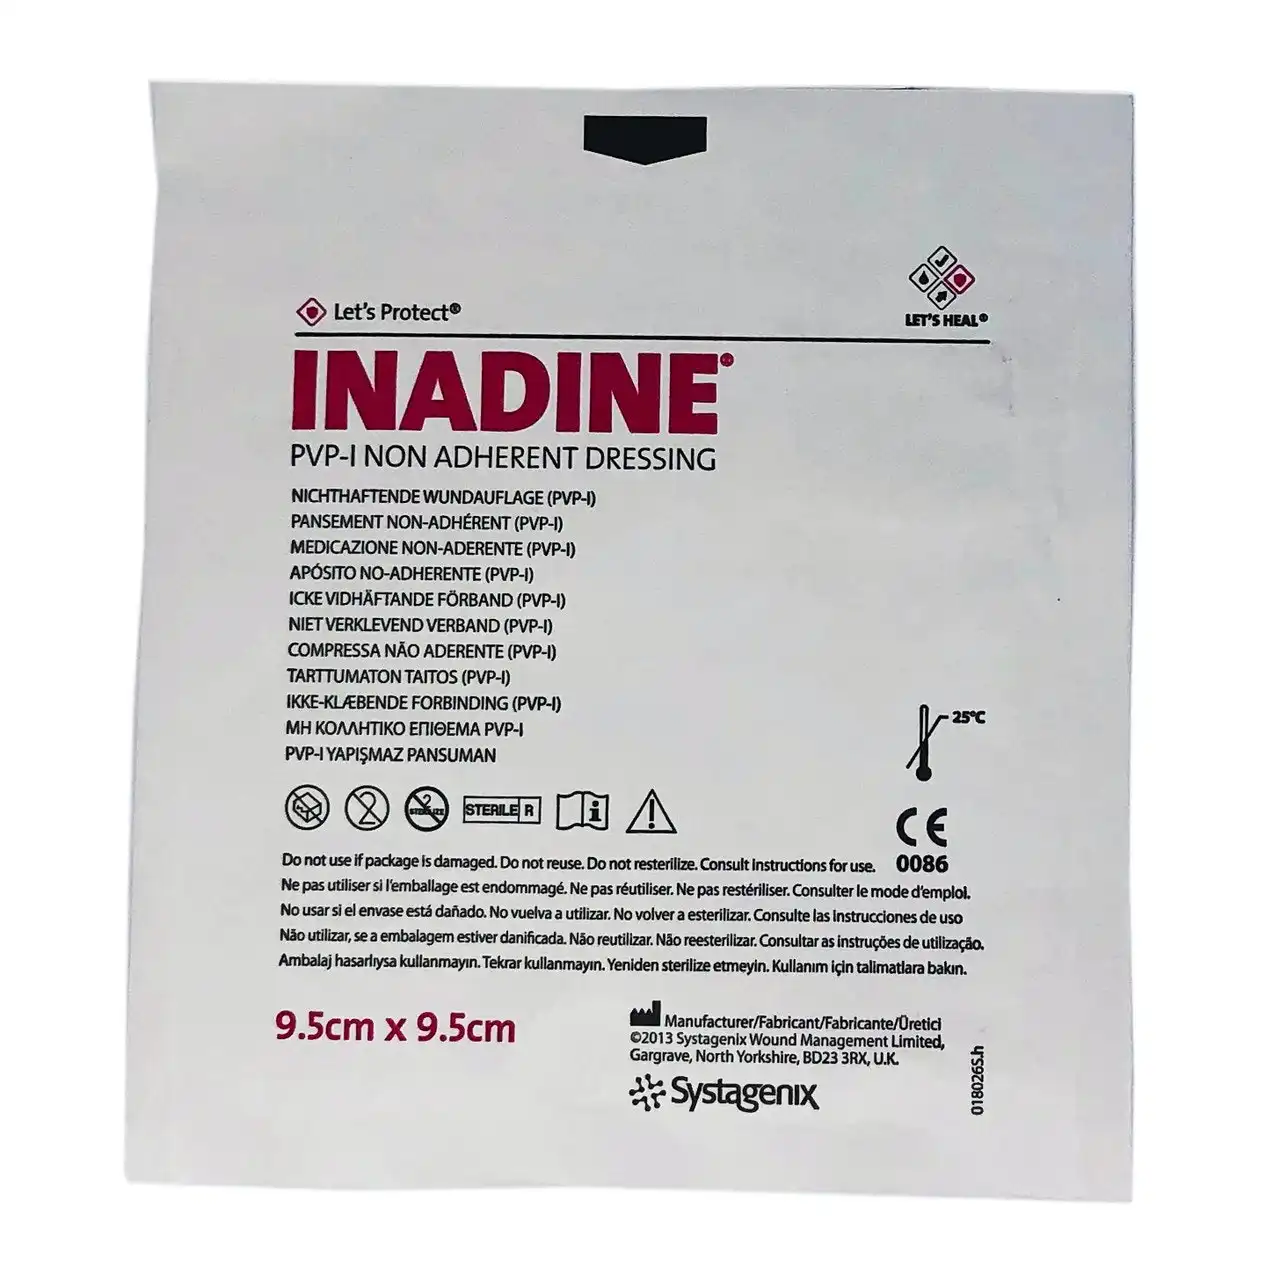 Inadine PVP-I Non Adherent Dressing 9.5cm x 9.5cm